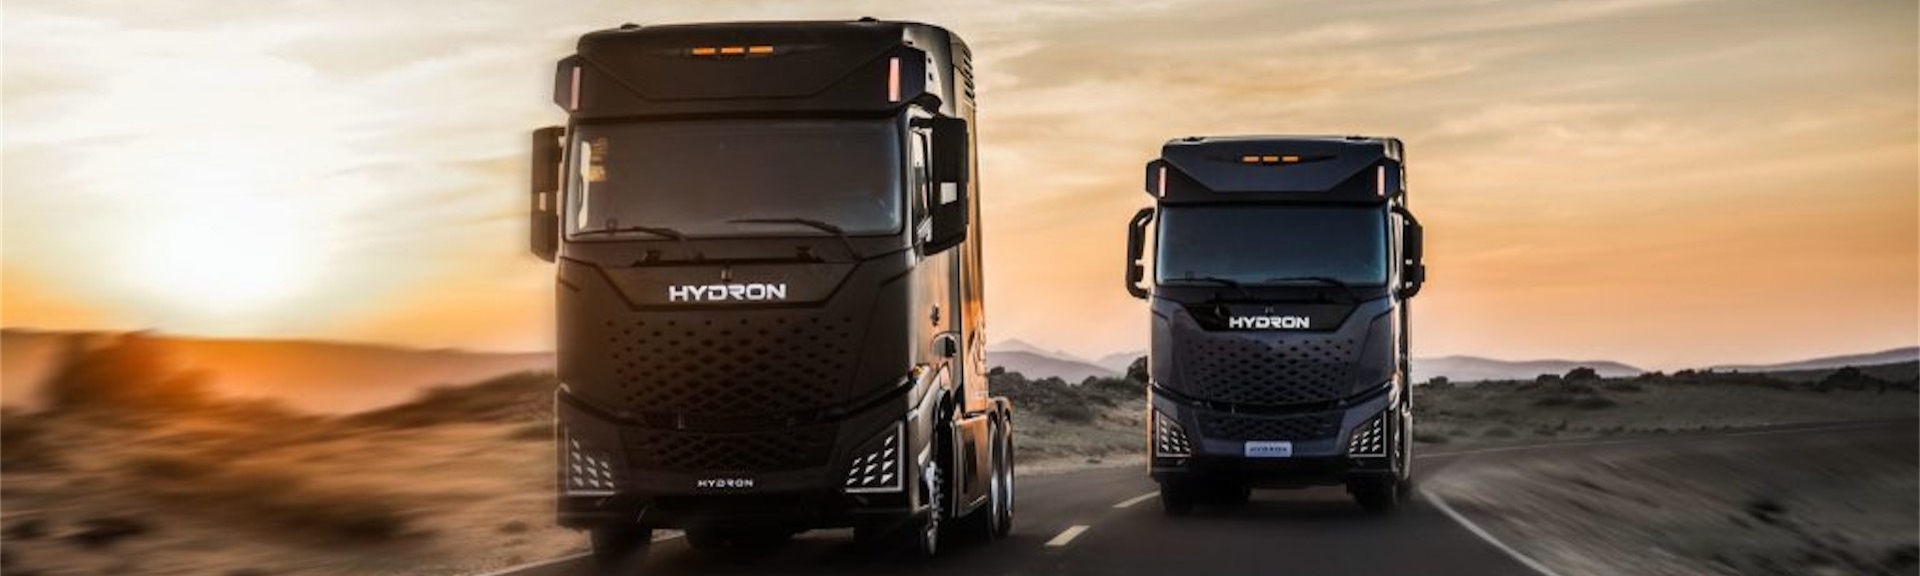 hydron_trucks-christan-kromme-speaker-futurist.